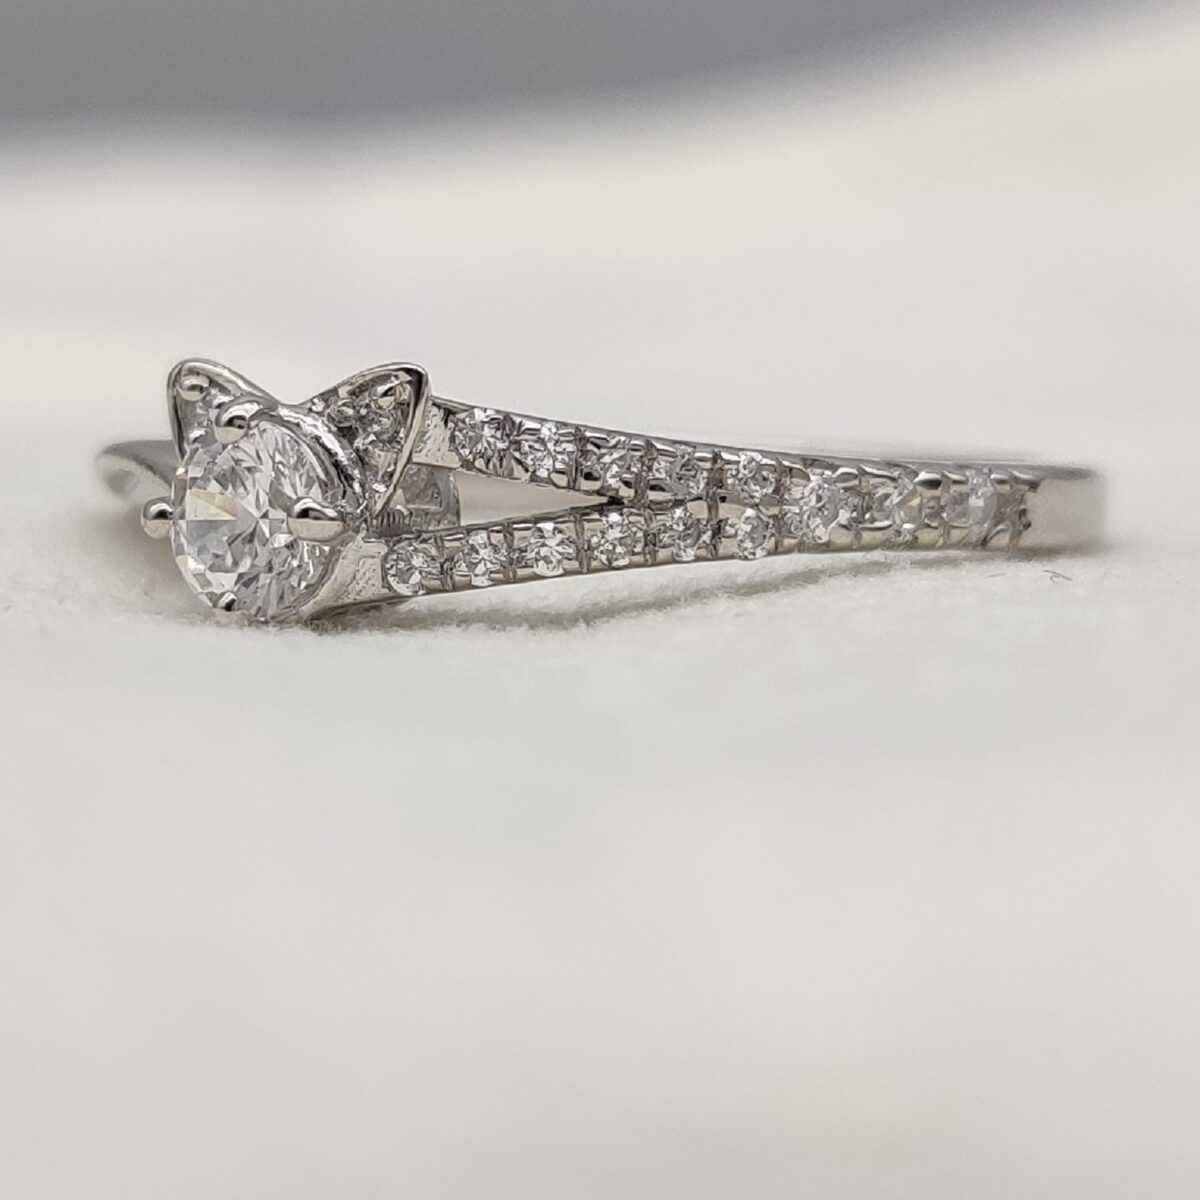 Kitty cat diamond ring (round cut lab grown diamond) pave set round diamond on band crafted 14k white gold.